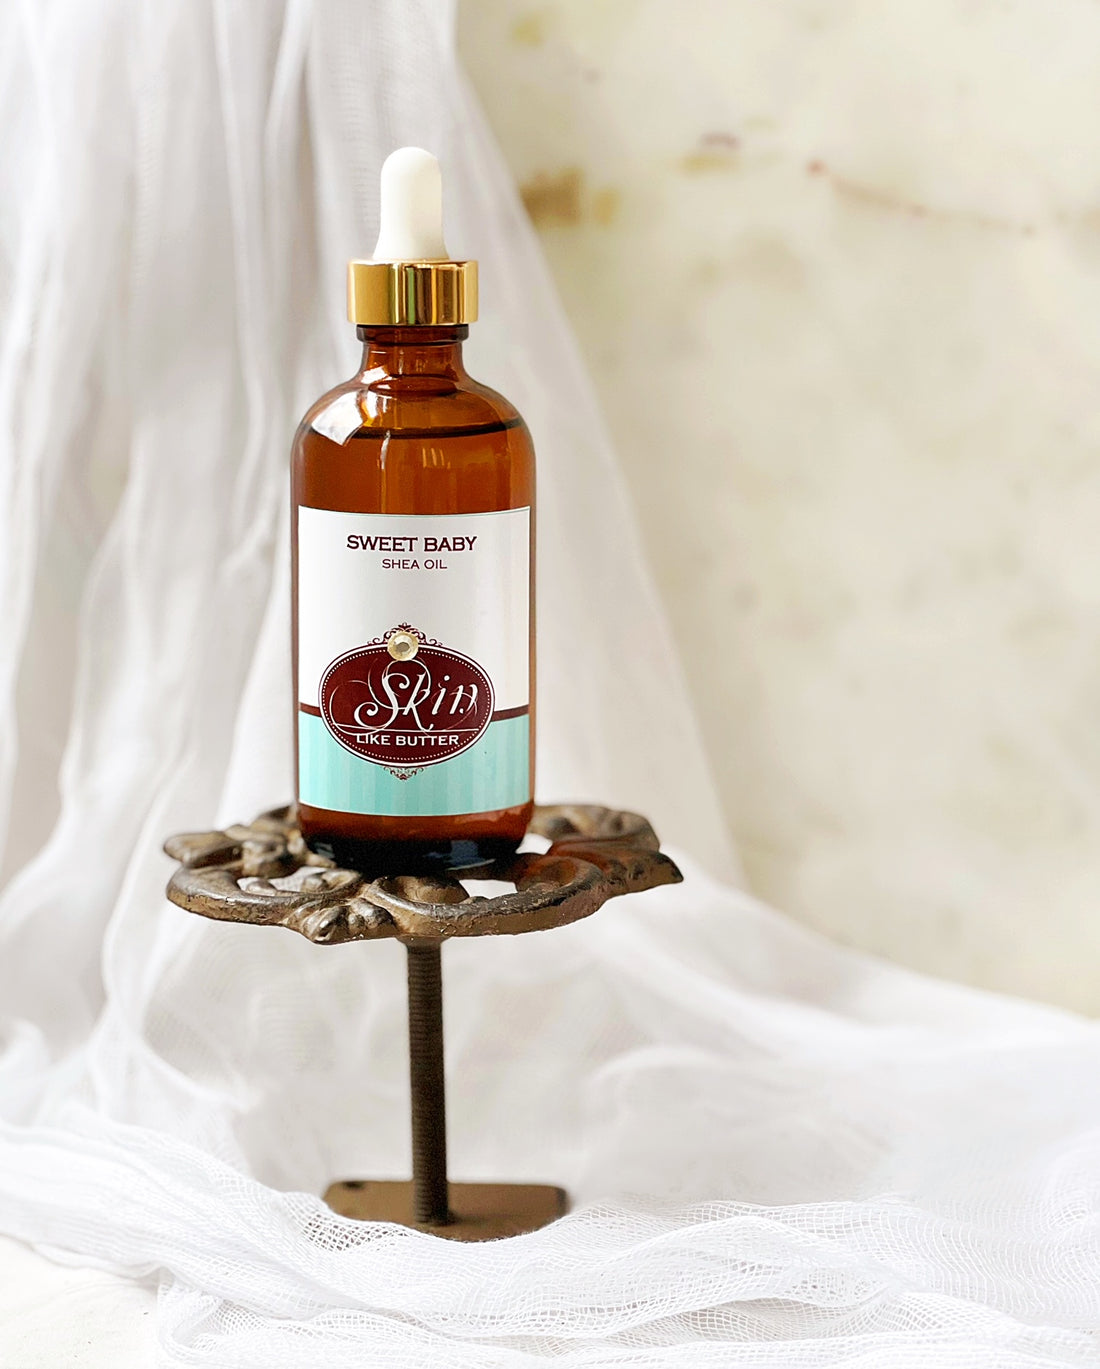 SWEET BABY - Scented Shea Oil - in 4oz amber bottles, skin moisturizer